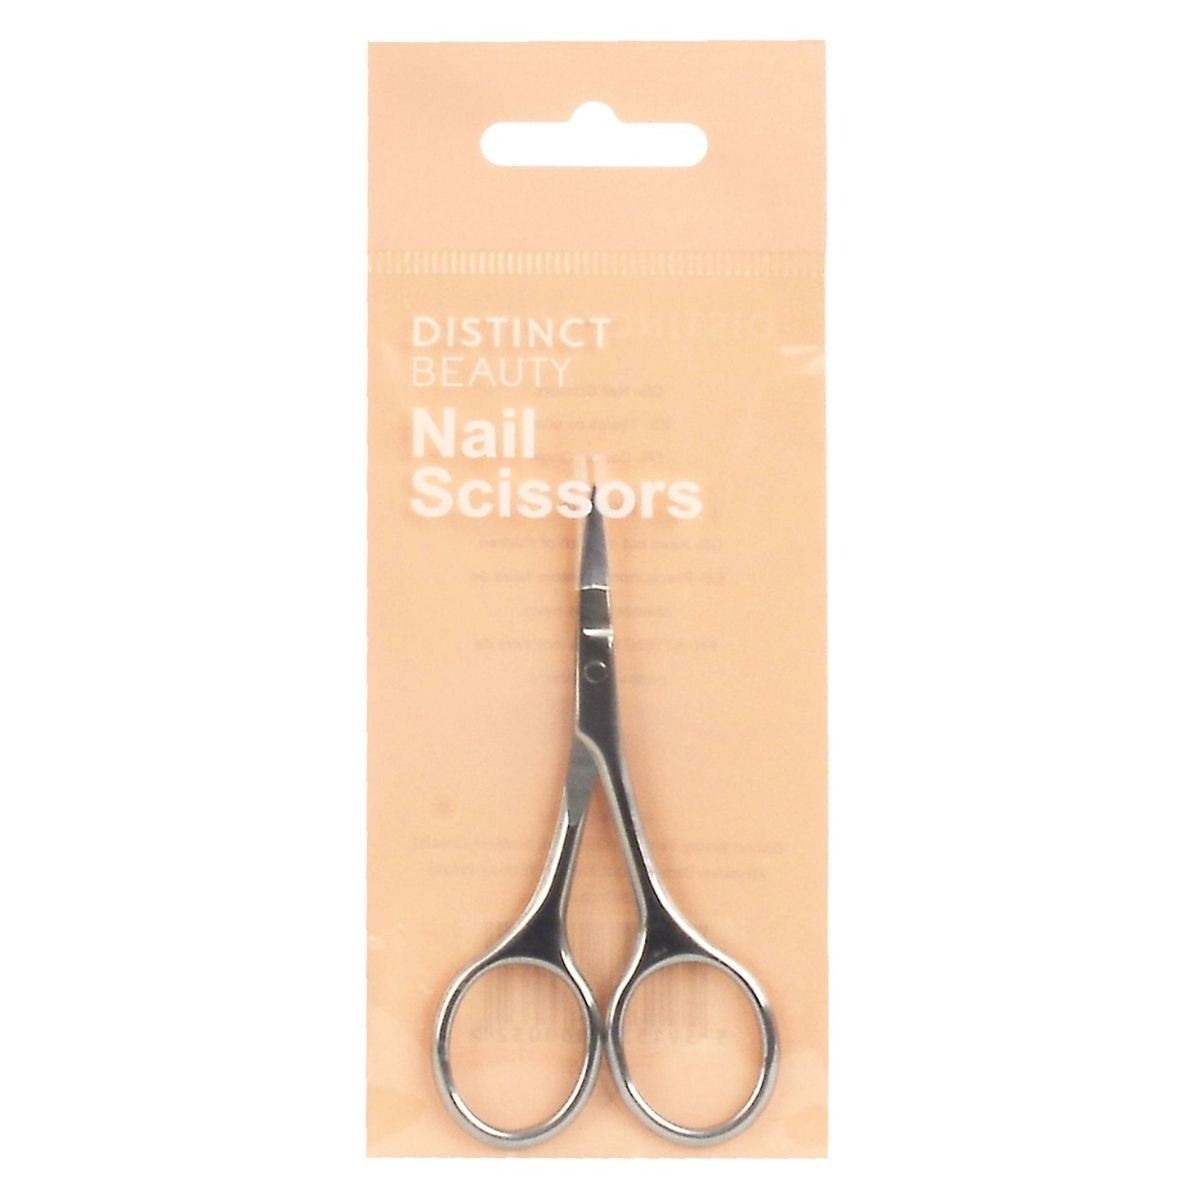 Distinct Beauty Nail Scissors